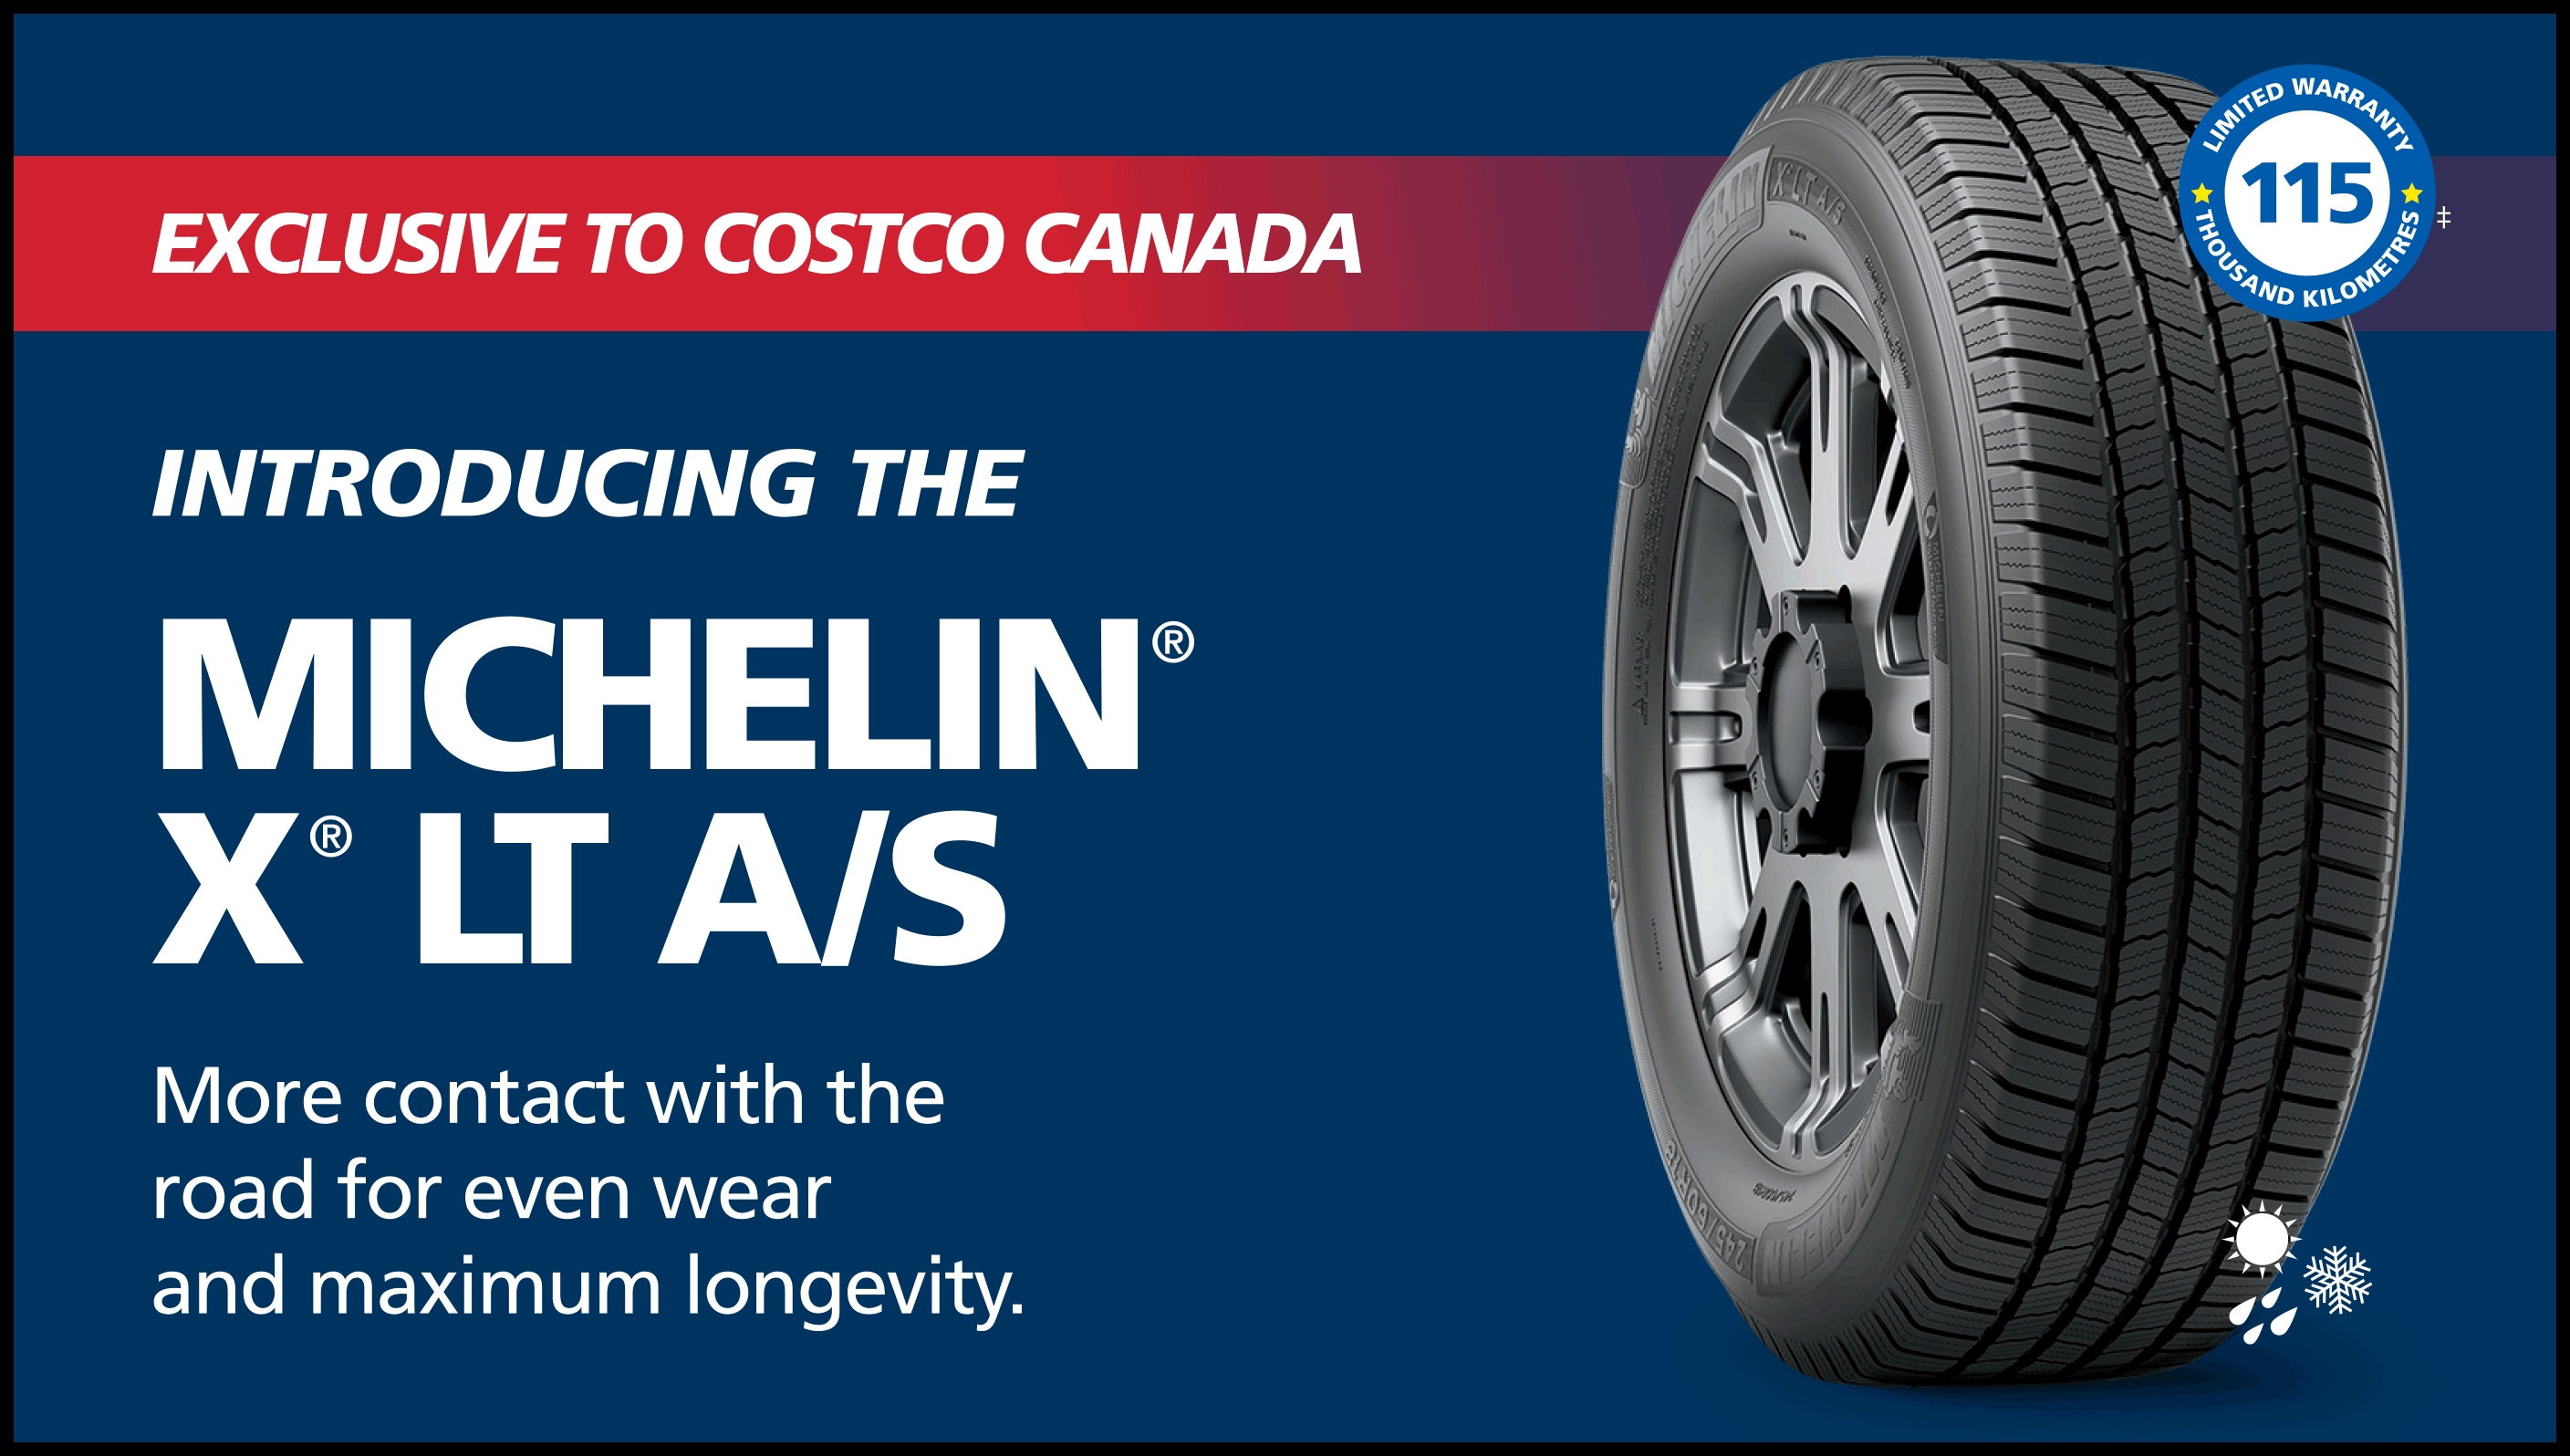 Tires Prices At Costco Discover Michelin tires exclusive to Costco Canada